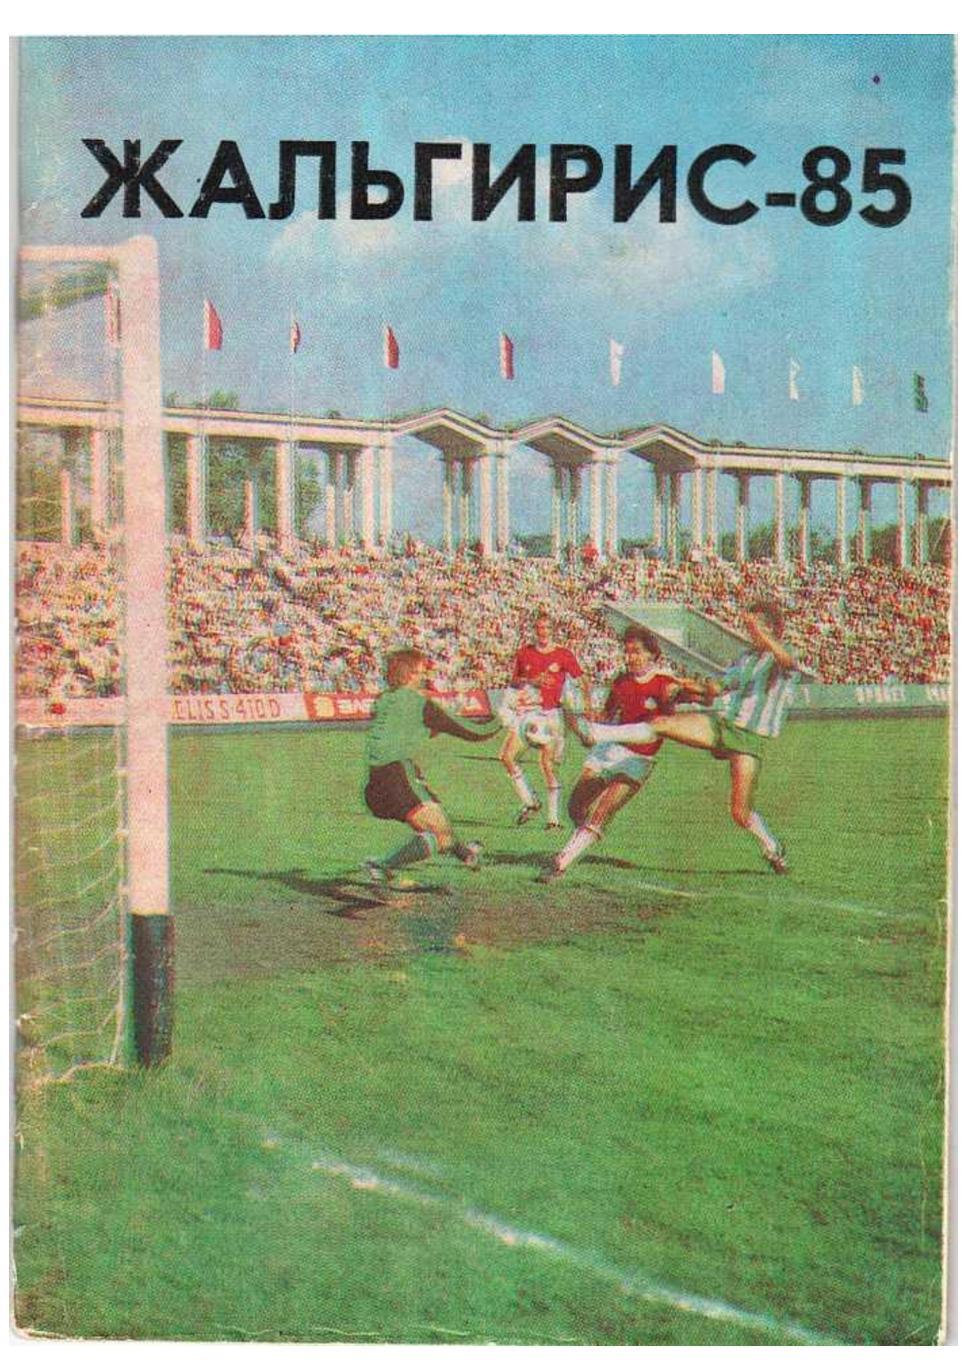 Жальгирис–85. Программа чемпионата СССР по футболу. Вильнюс, 1985.